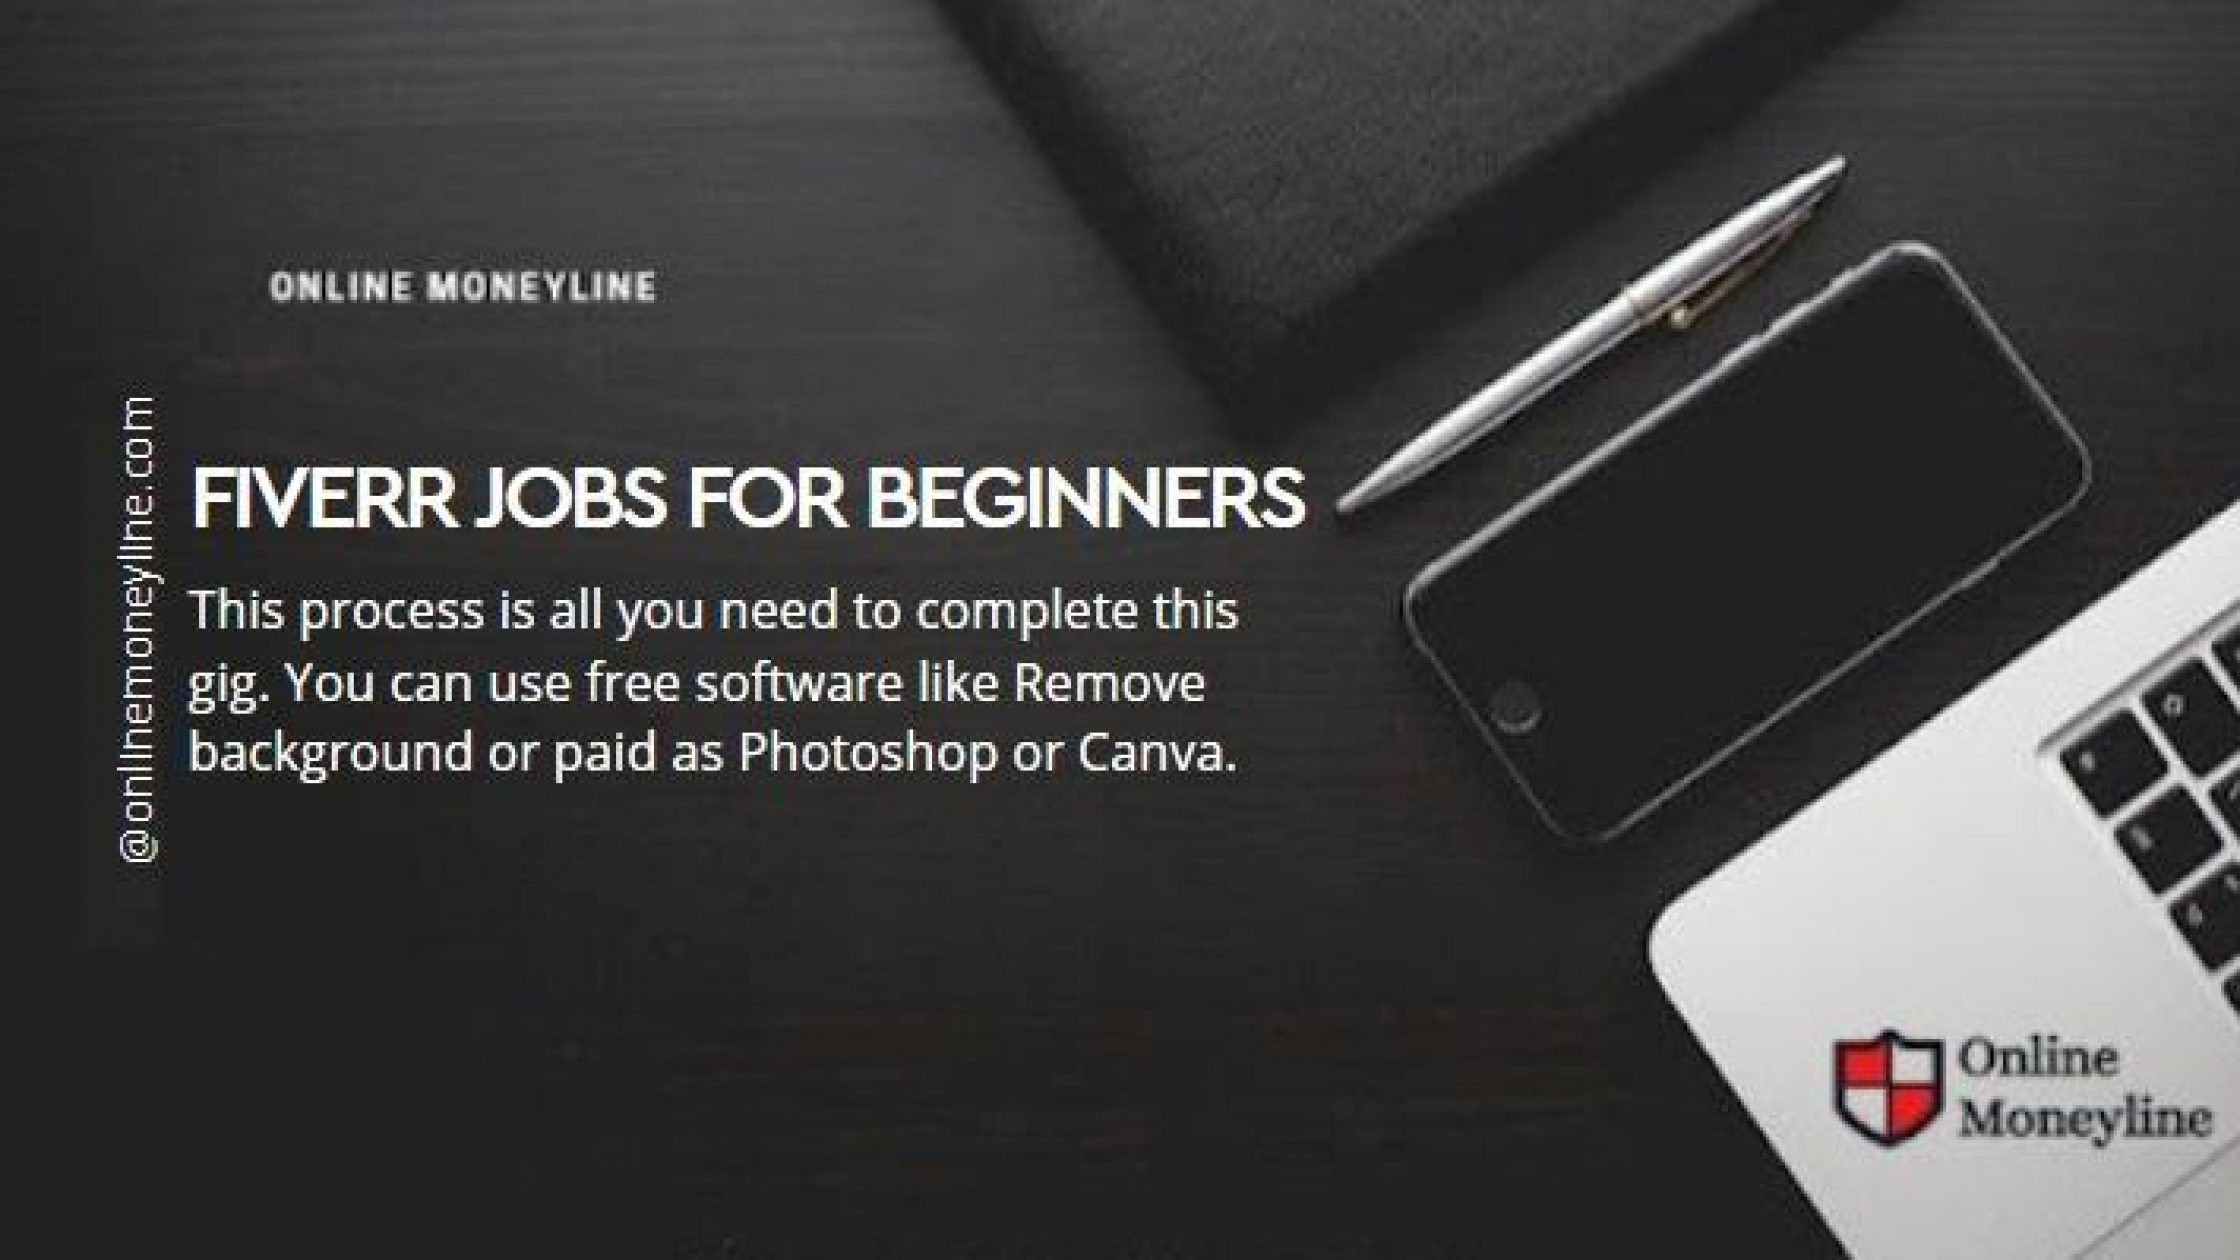 Fiverr jobs for beginners